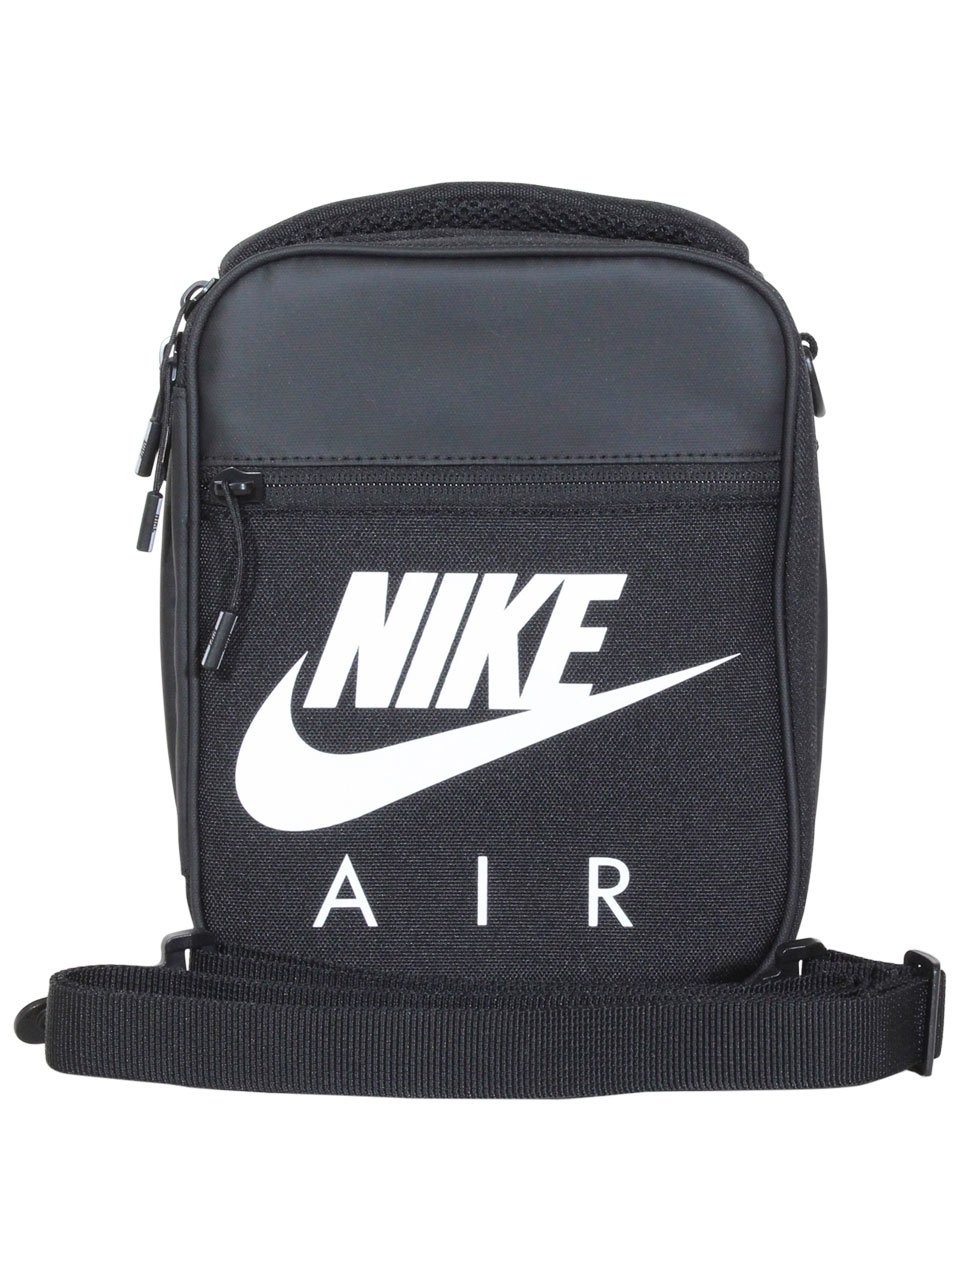 Palabra Felicidades lana Nike Air Fuel Pack Lunch Box Insulated Snack Bag | JoyLot.com